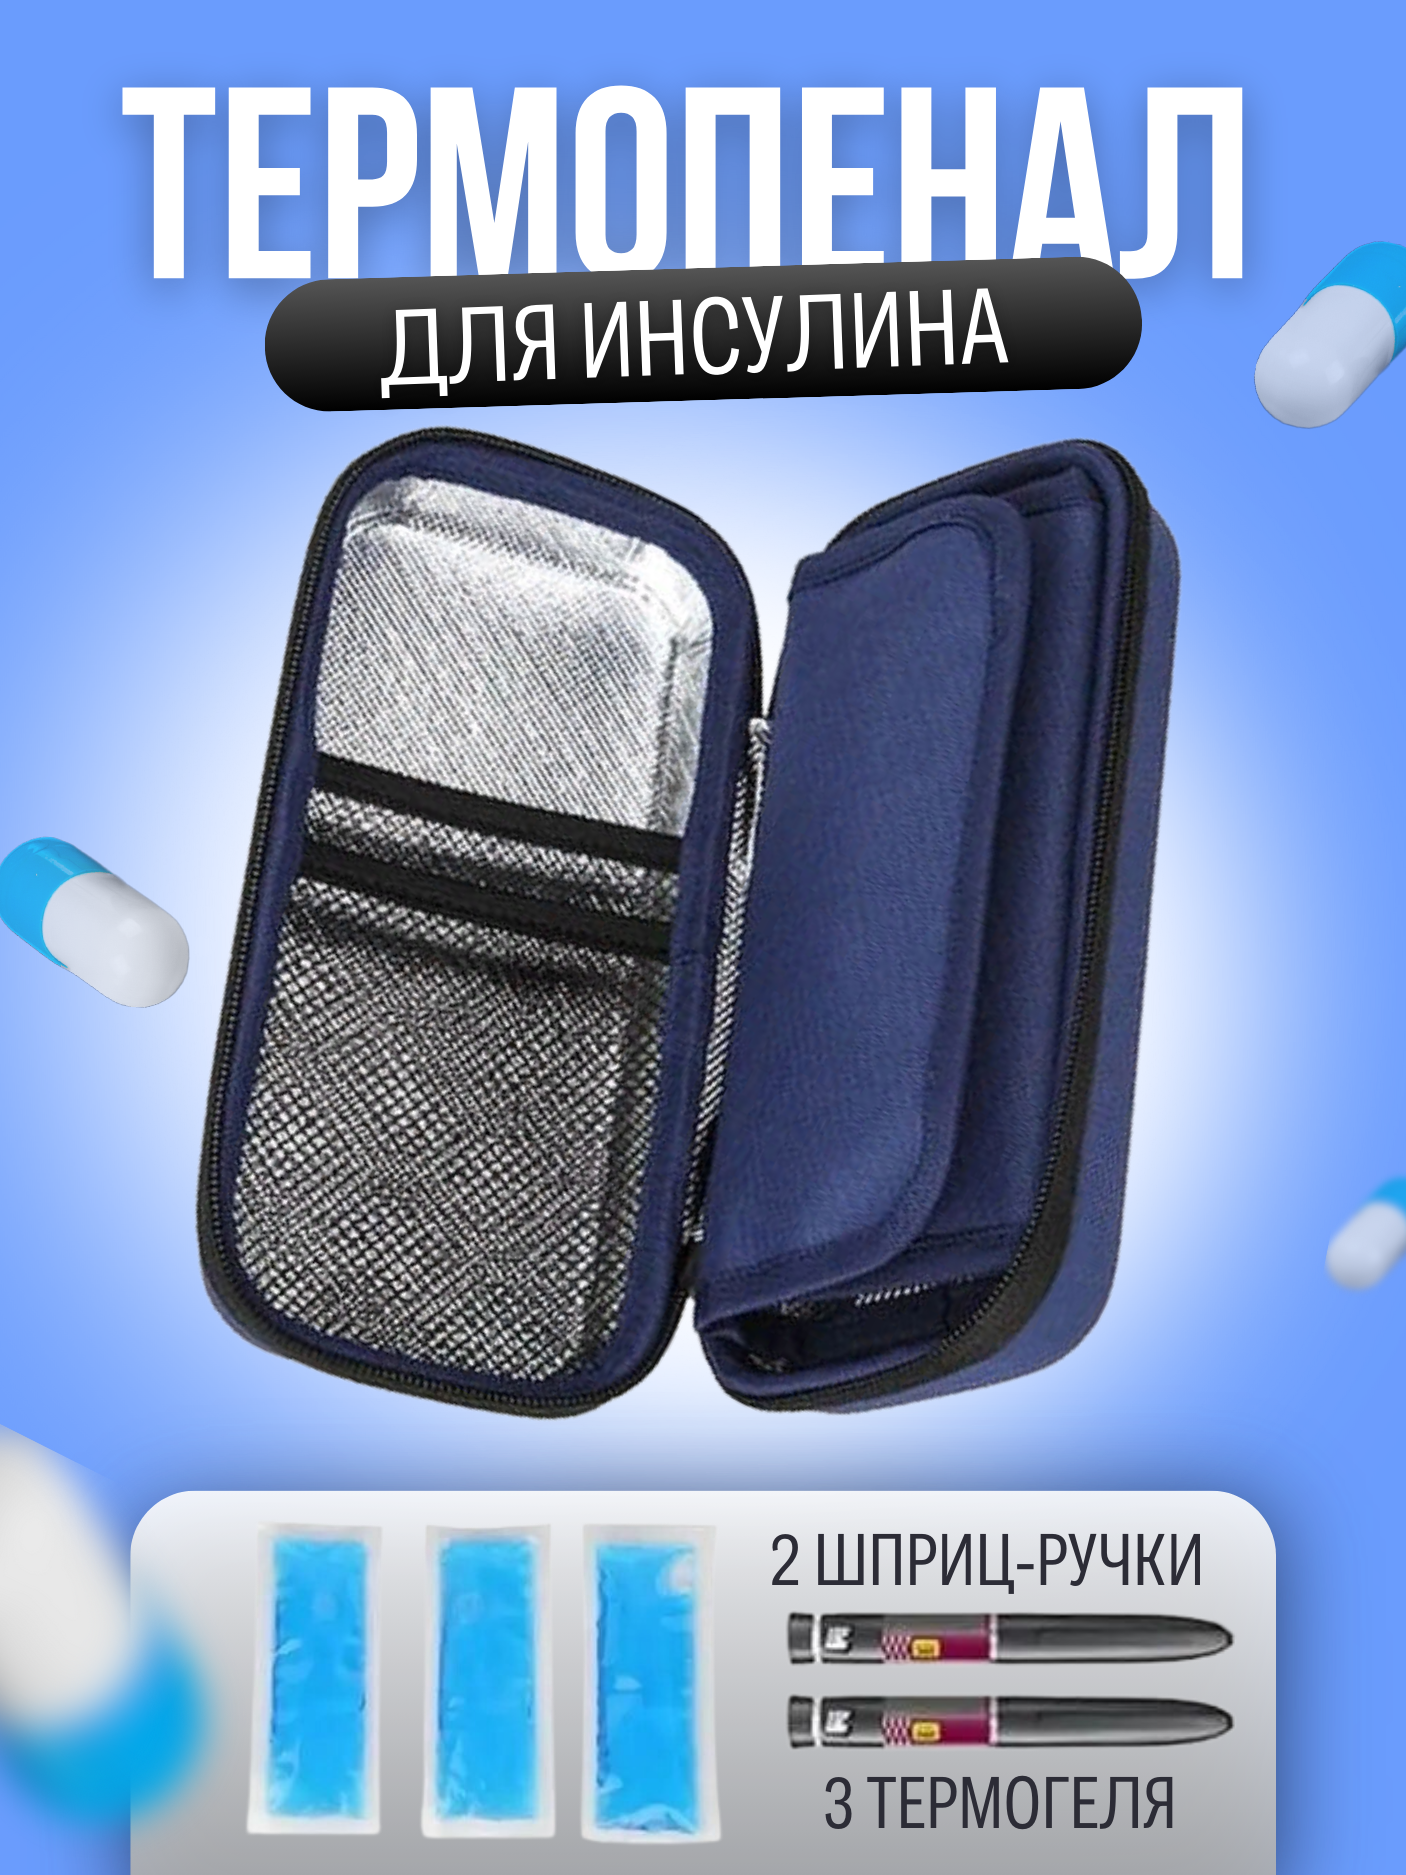 Термопенал для инсулина с аккумуляторами холода синий